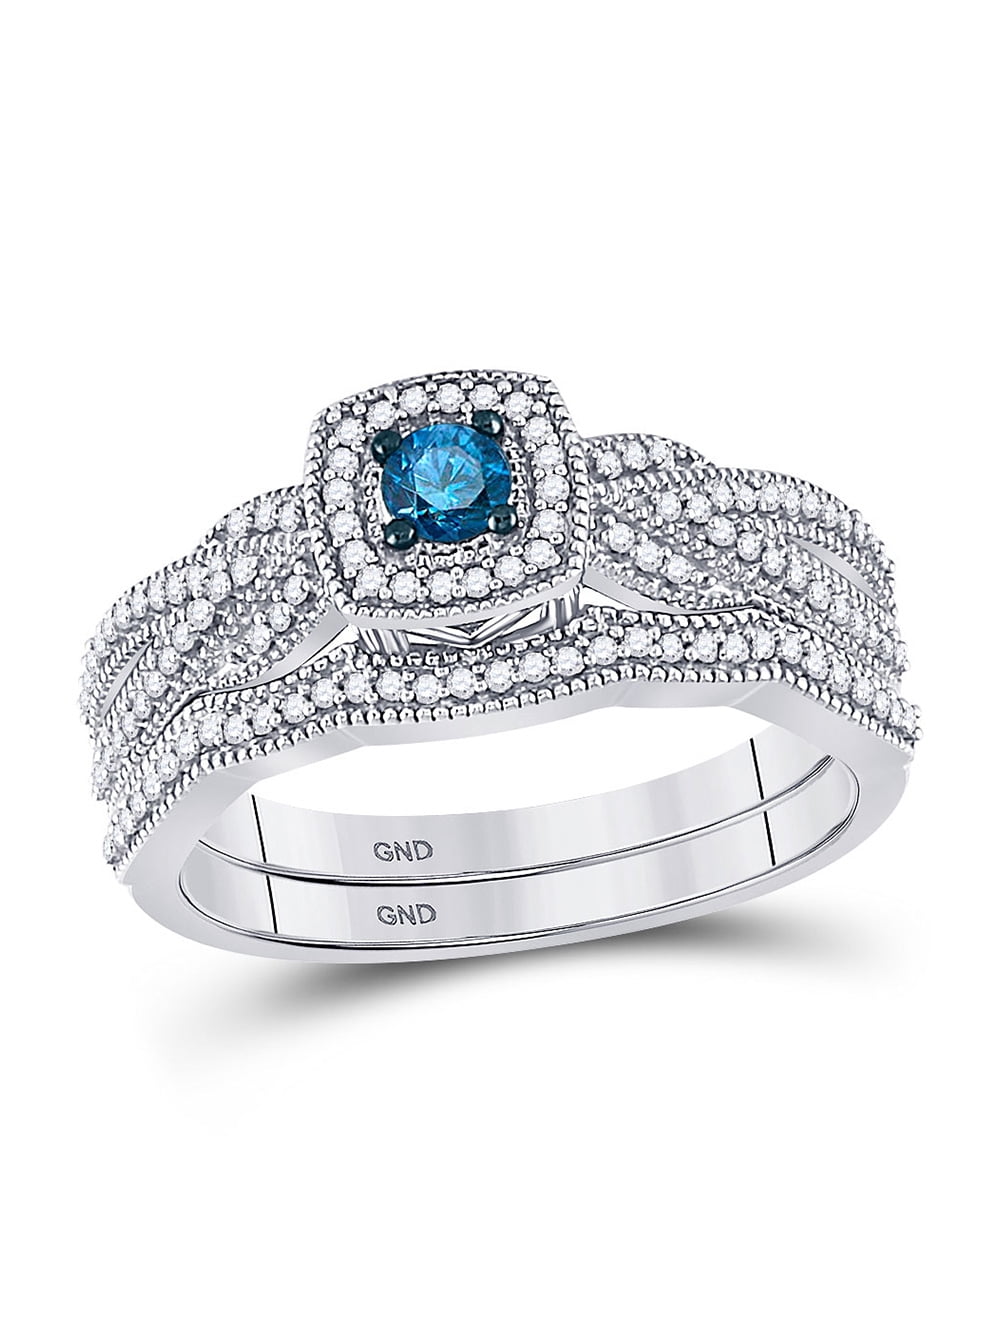 Details about   Natural 5MM London Blue Topaz Gemstone 925 Sterling Silver Cluster Wedding Ring 